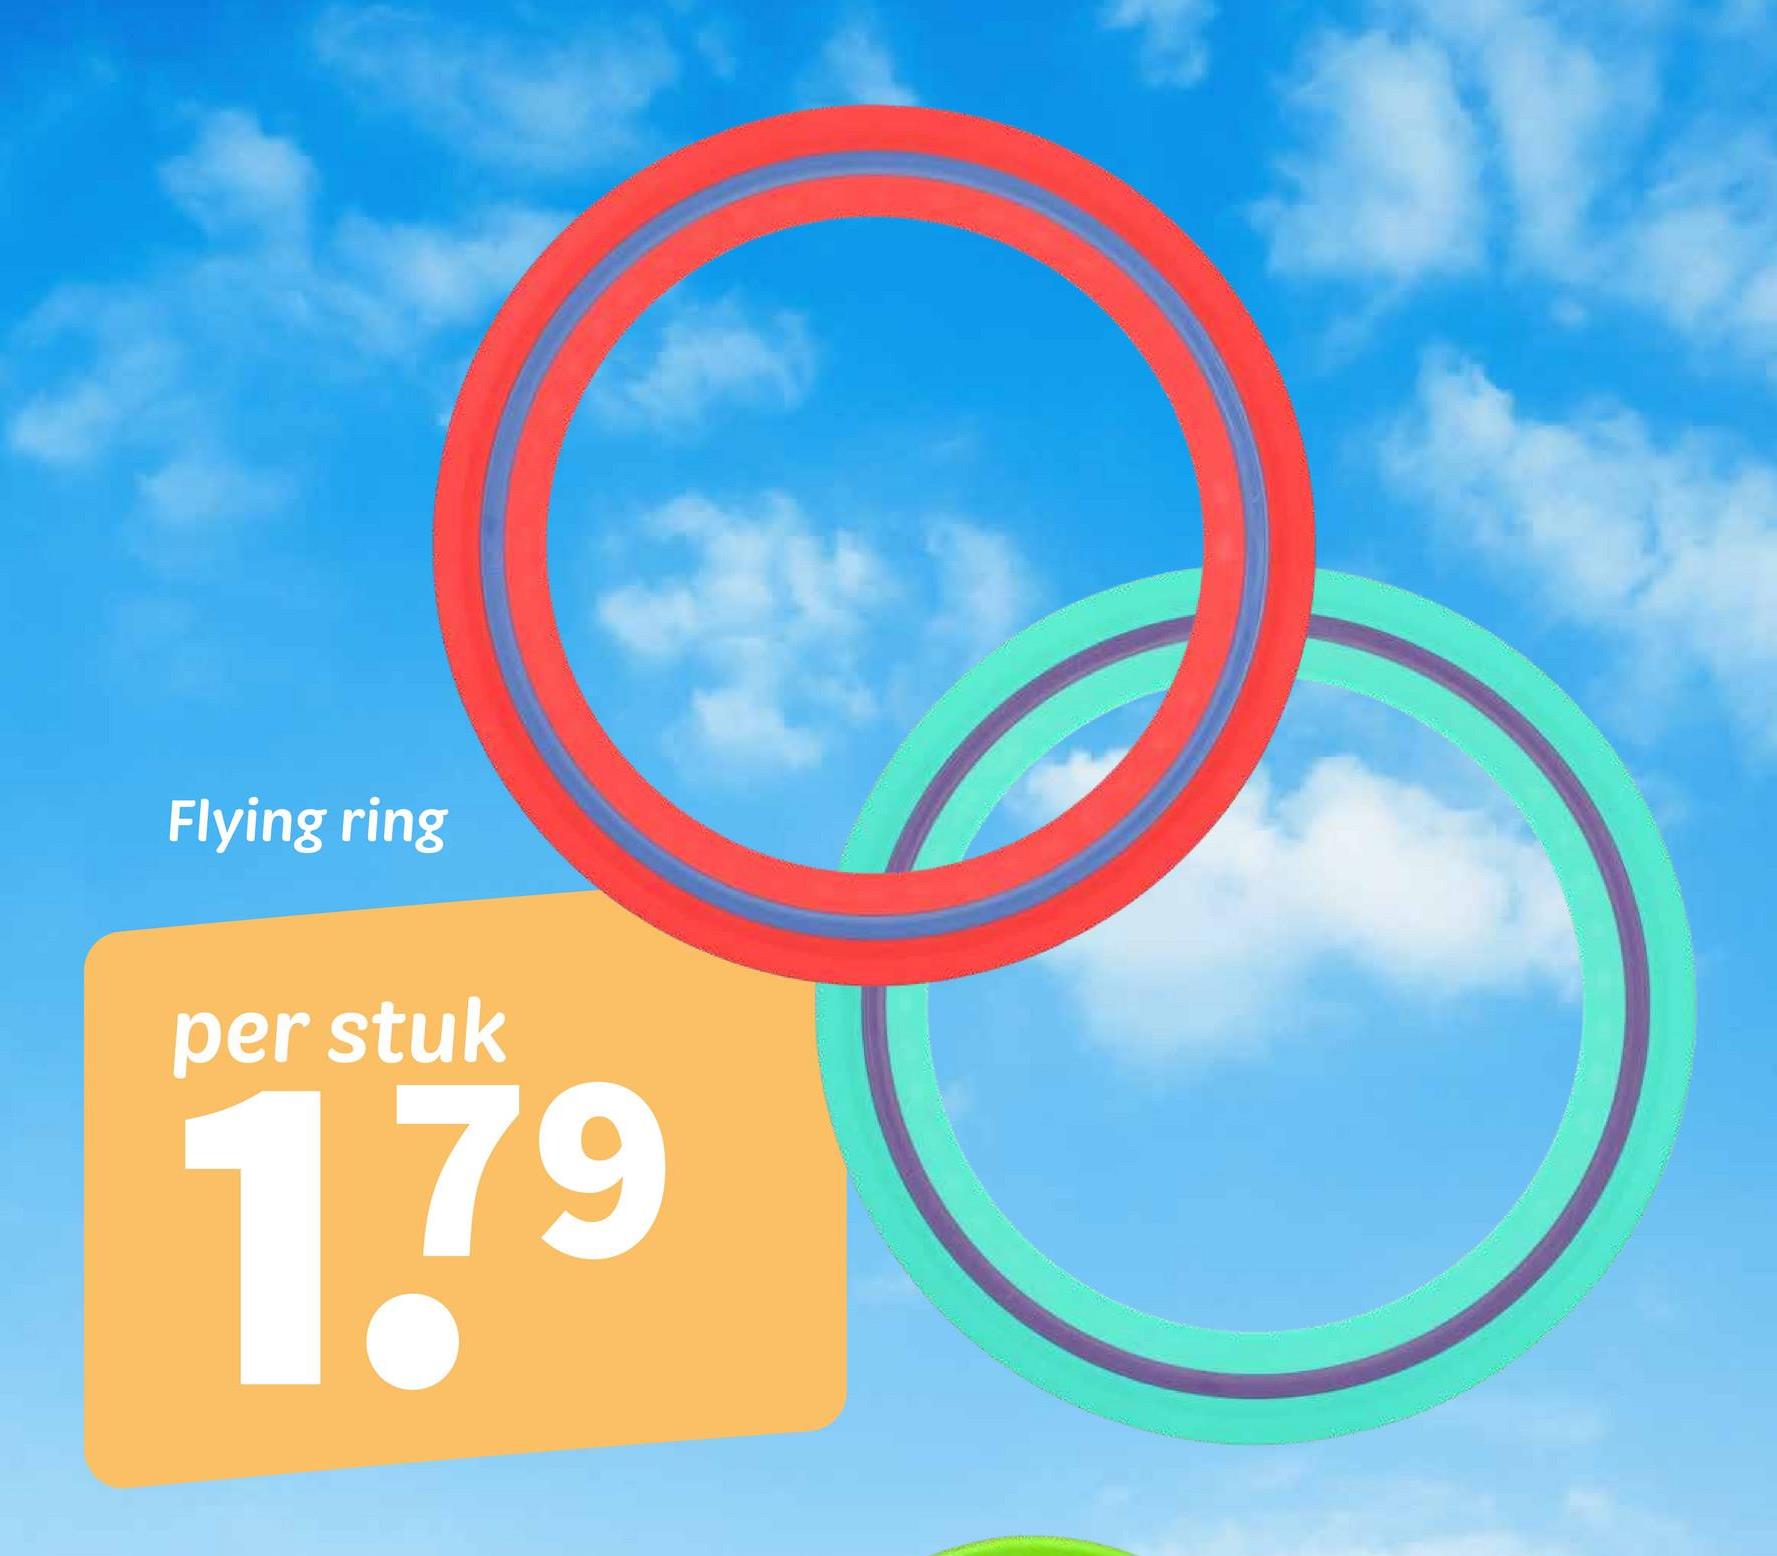 Flying ring
per stuk
1.79